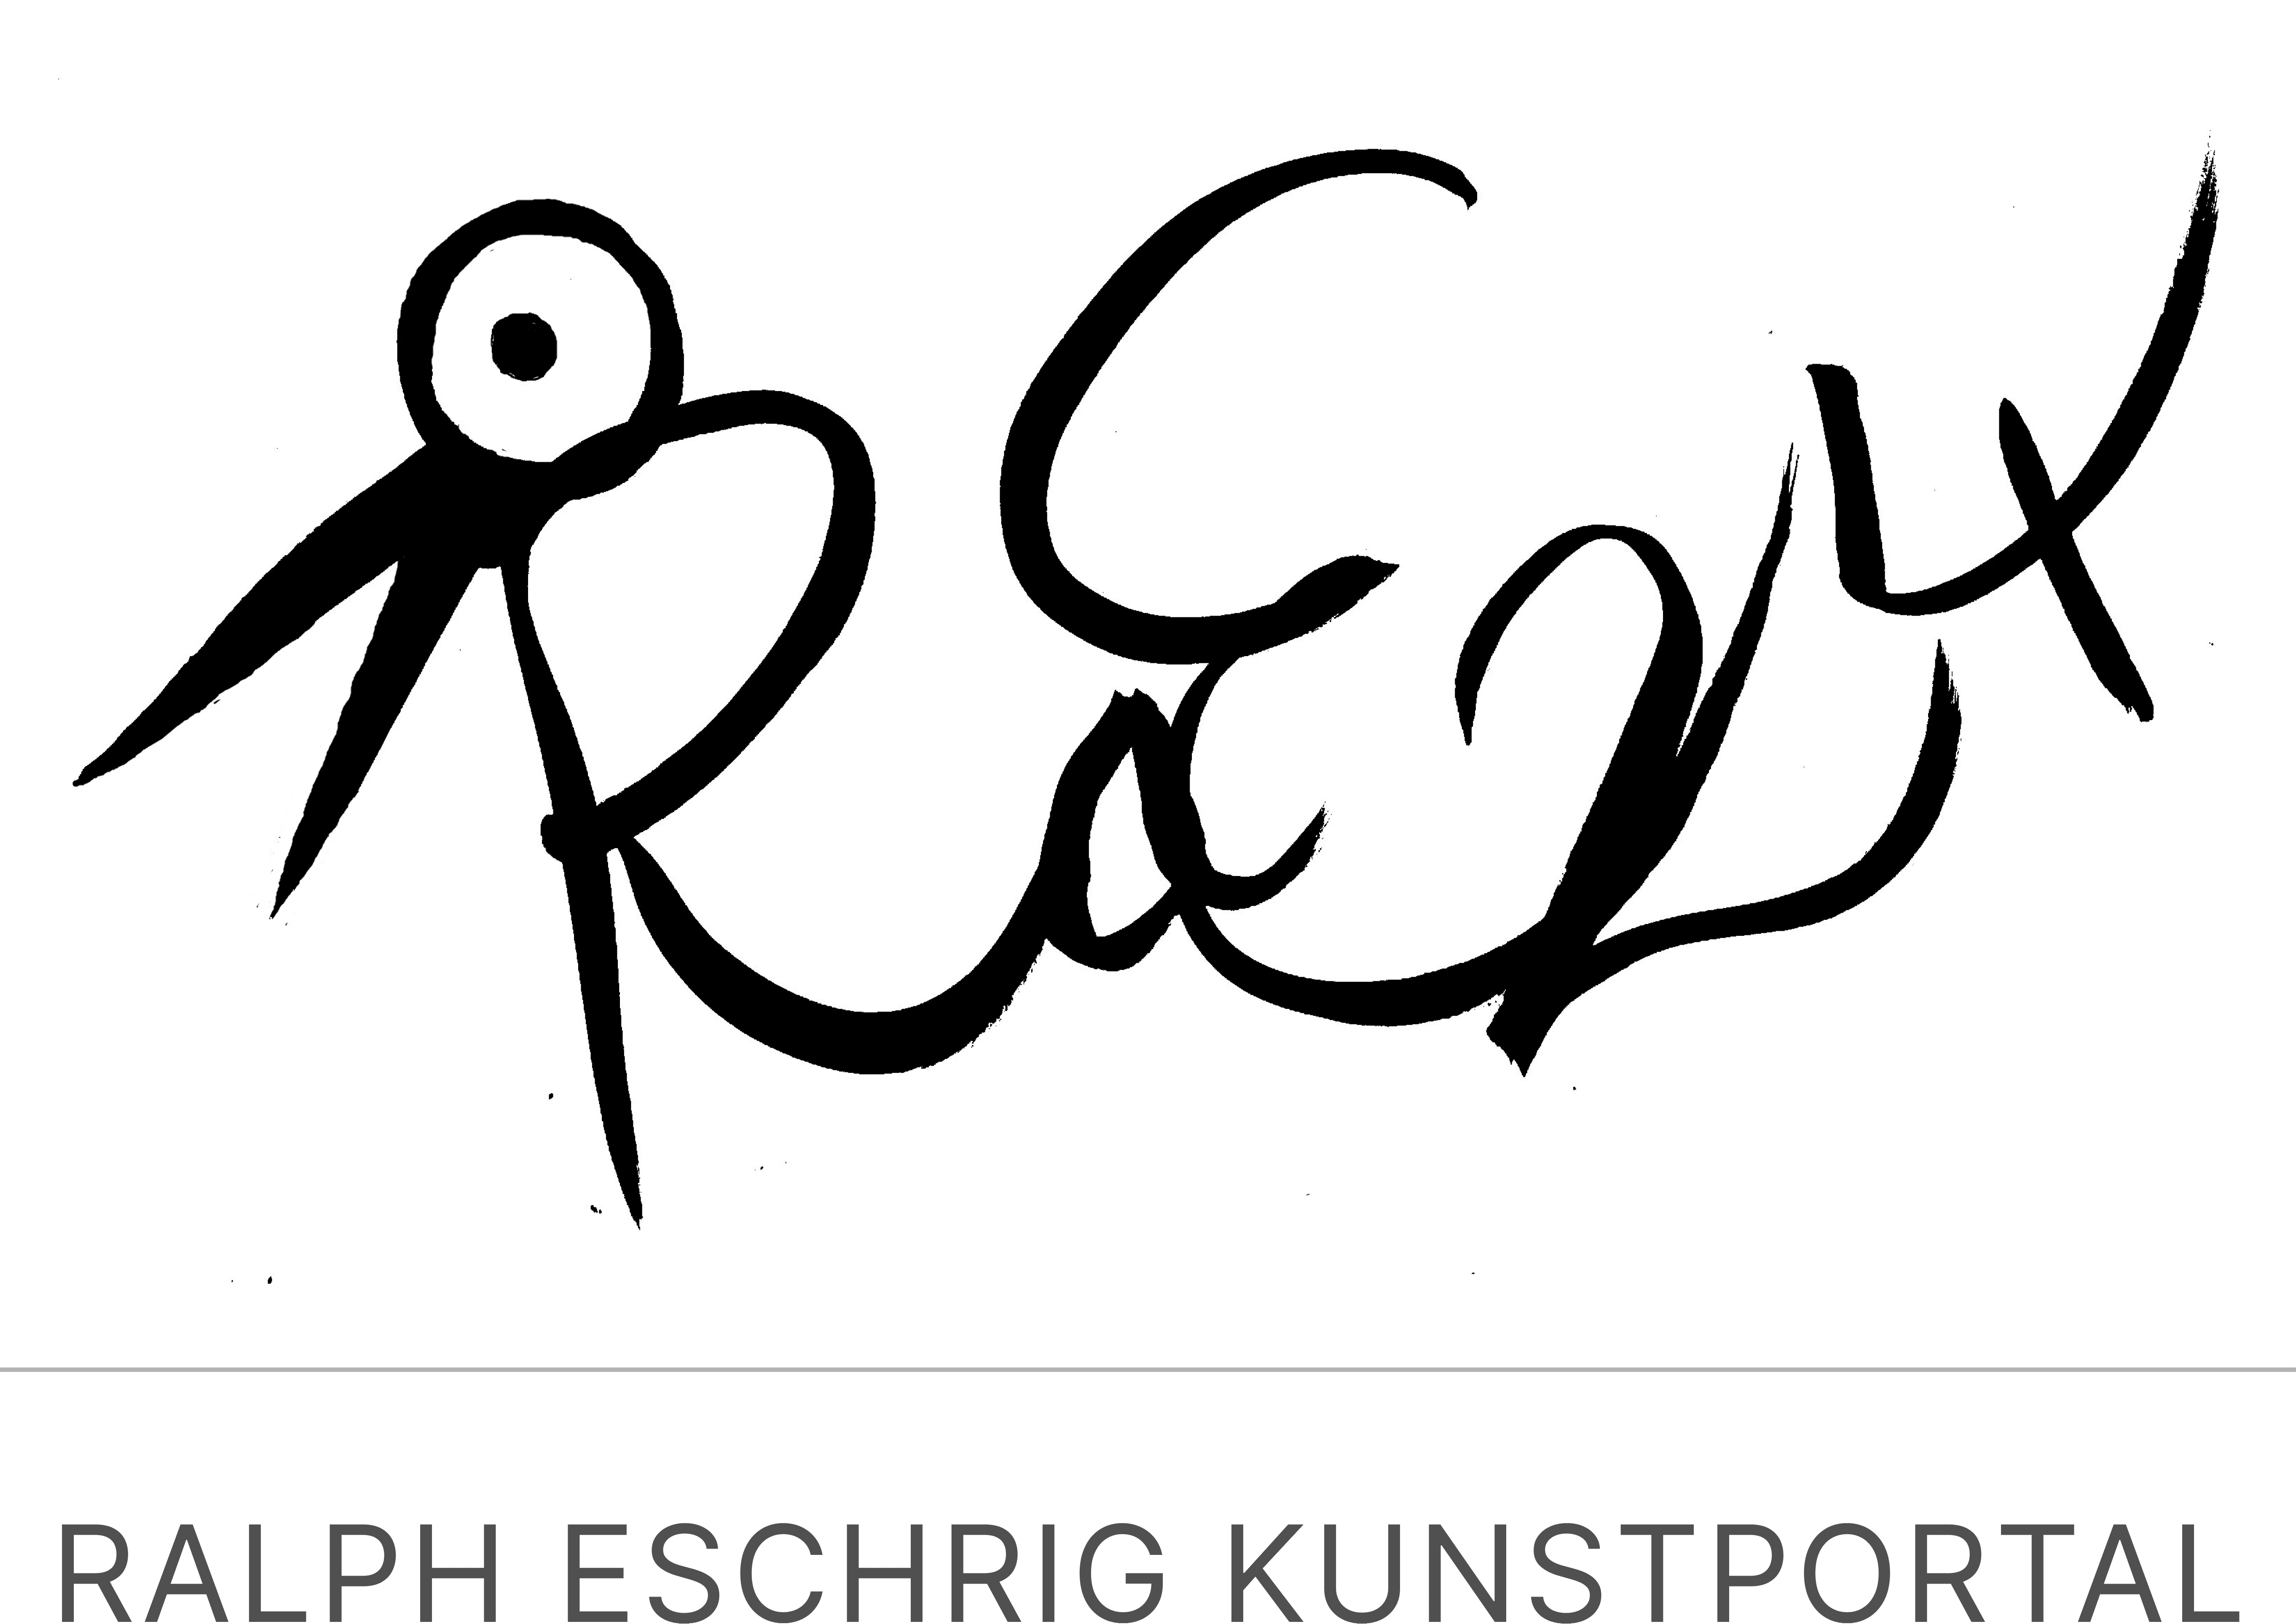 Eschrig Kunstportal